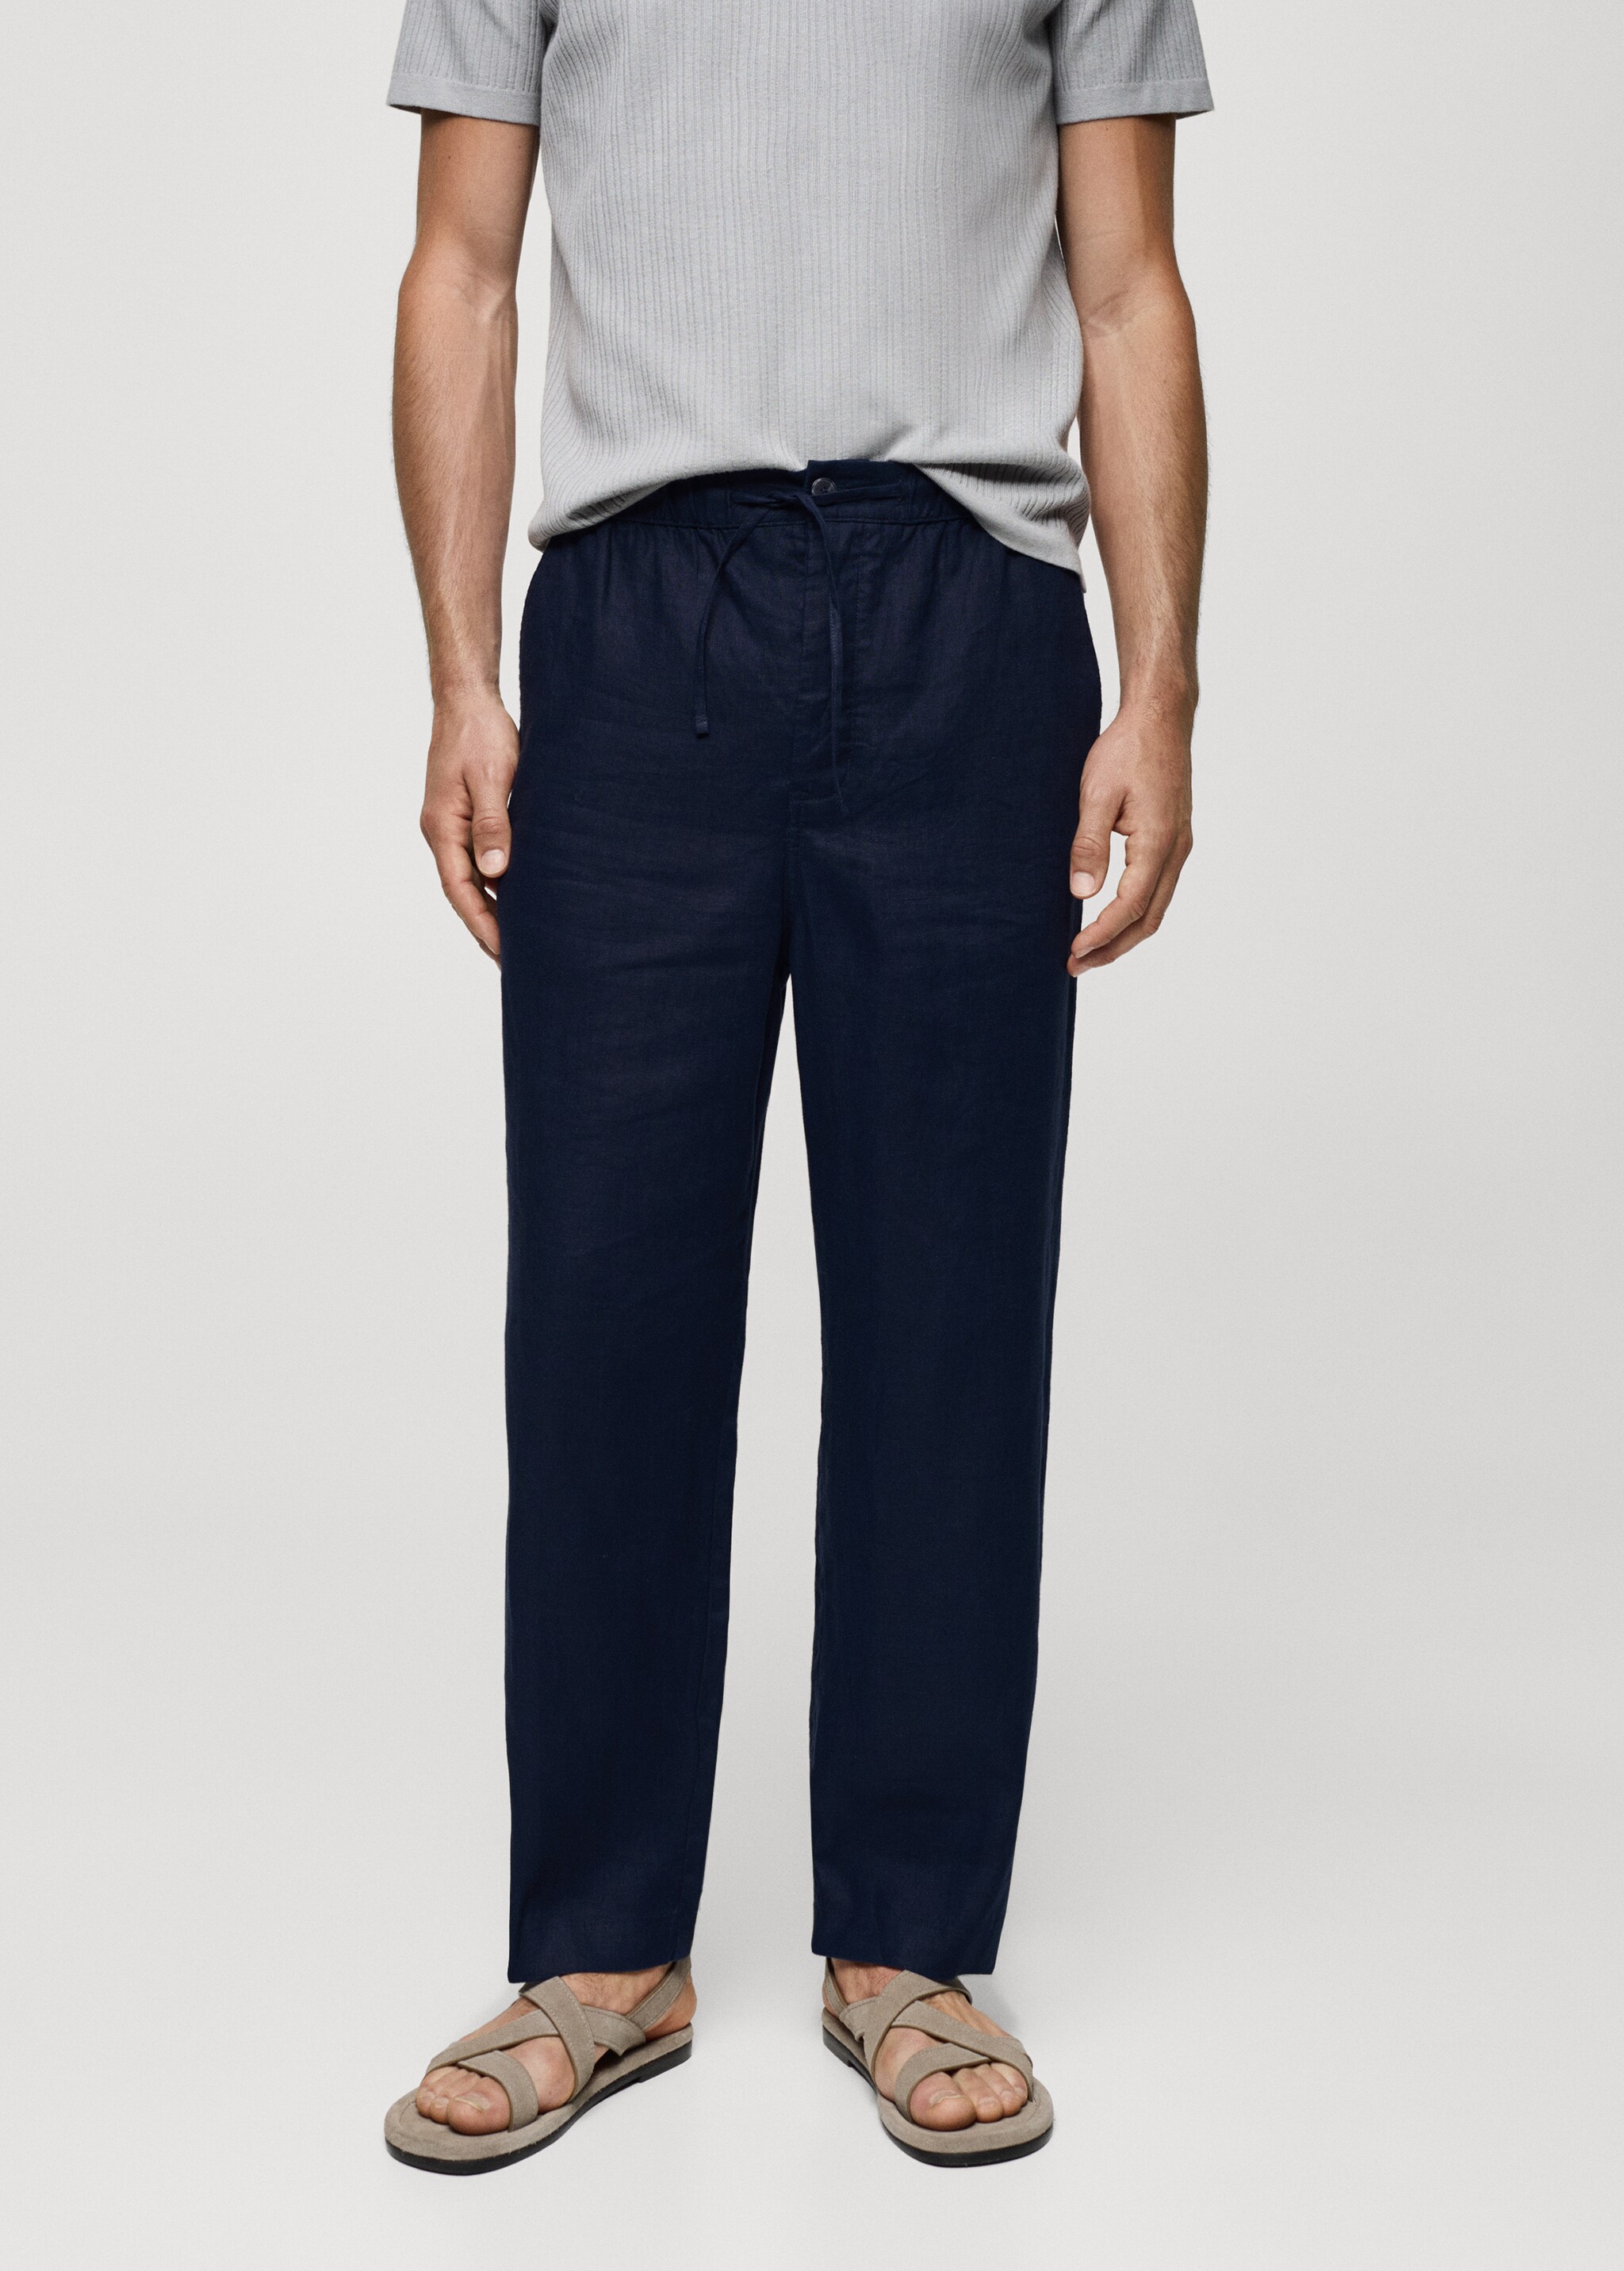 100% linen trousers with drawstring - Medium plane